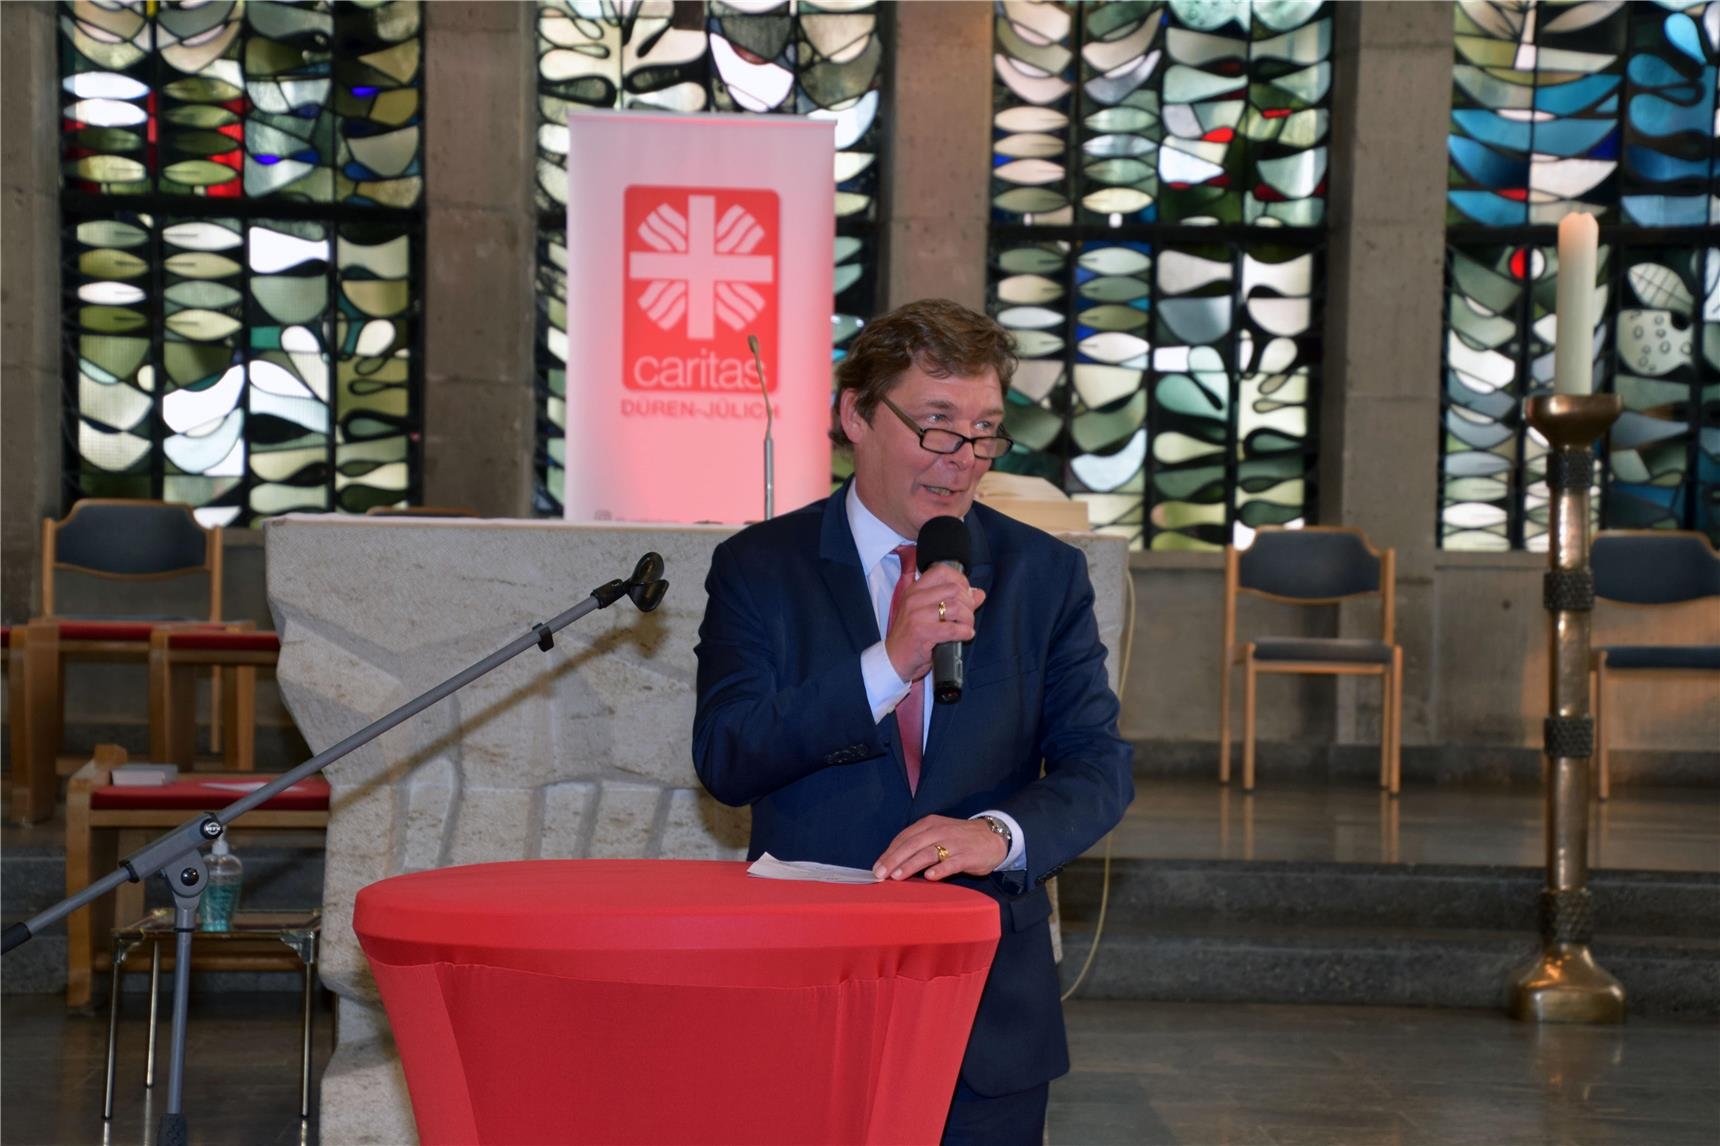 Mann hält eine Rede zum Caritas-Jubiläum in der Kirche St. Marien in Düren (Caritasverband Düren-Jülich / Erik Lehwald)